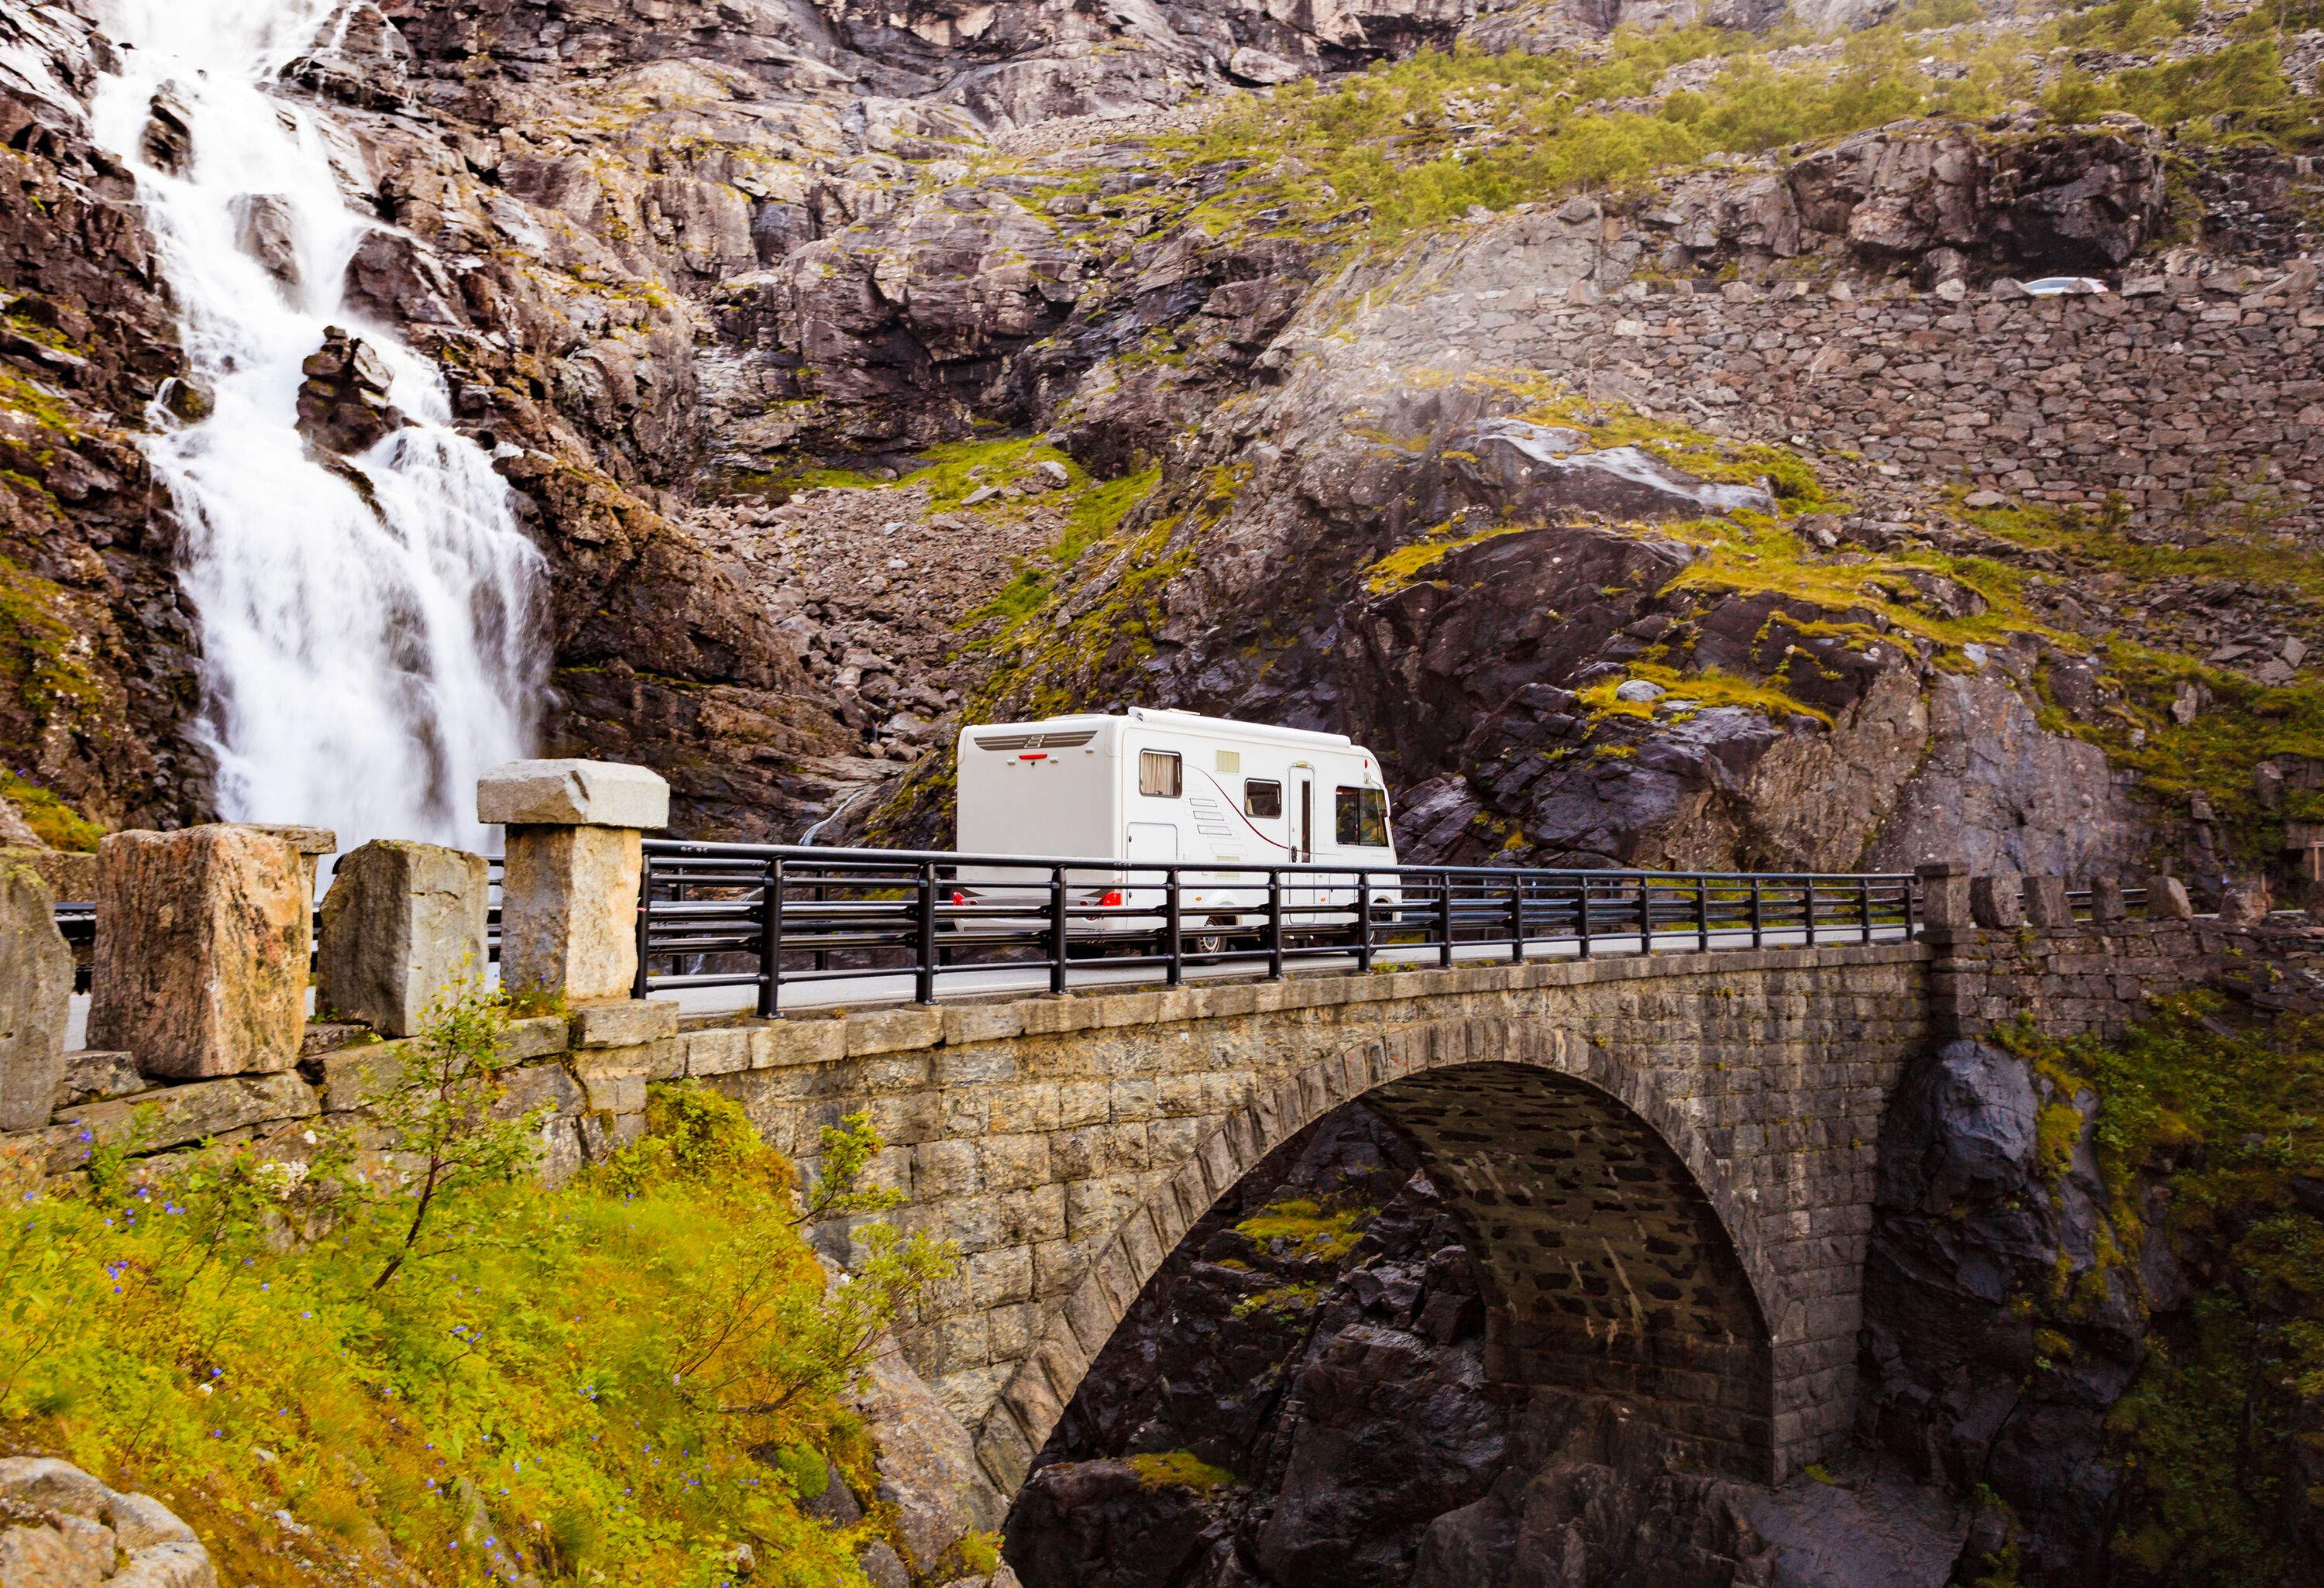 A white camper van crosses the arch bridge along a waterfall cascading through the steep.